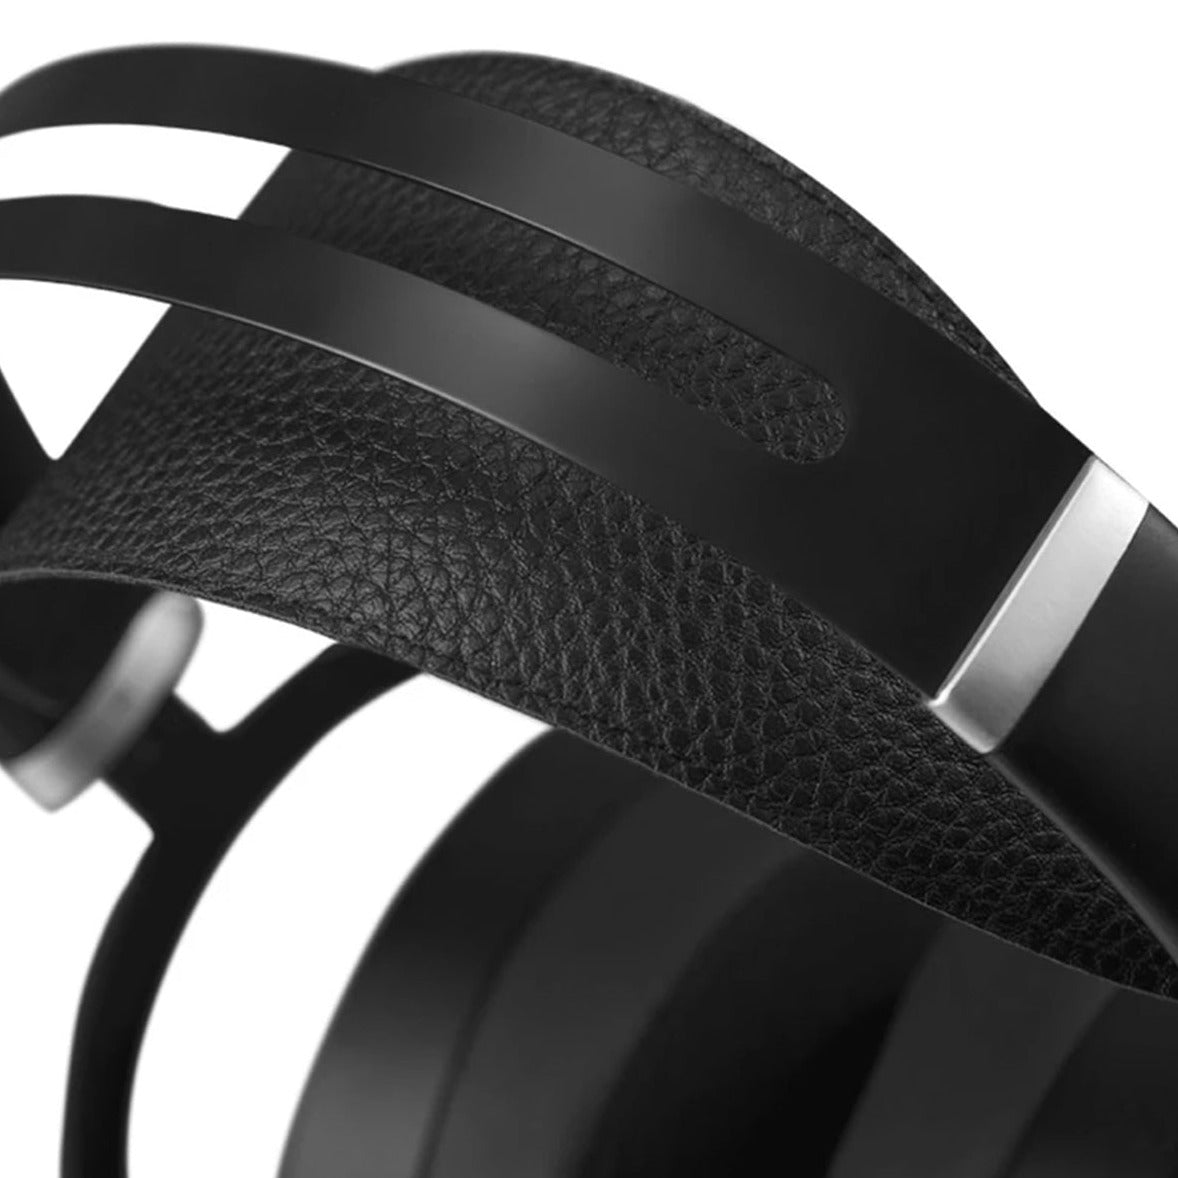 HiFiMAN SUNDARA Over-Ear Planar Magnetic Headphone